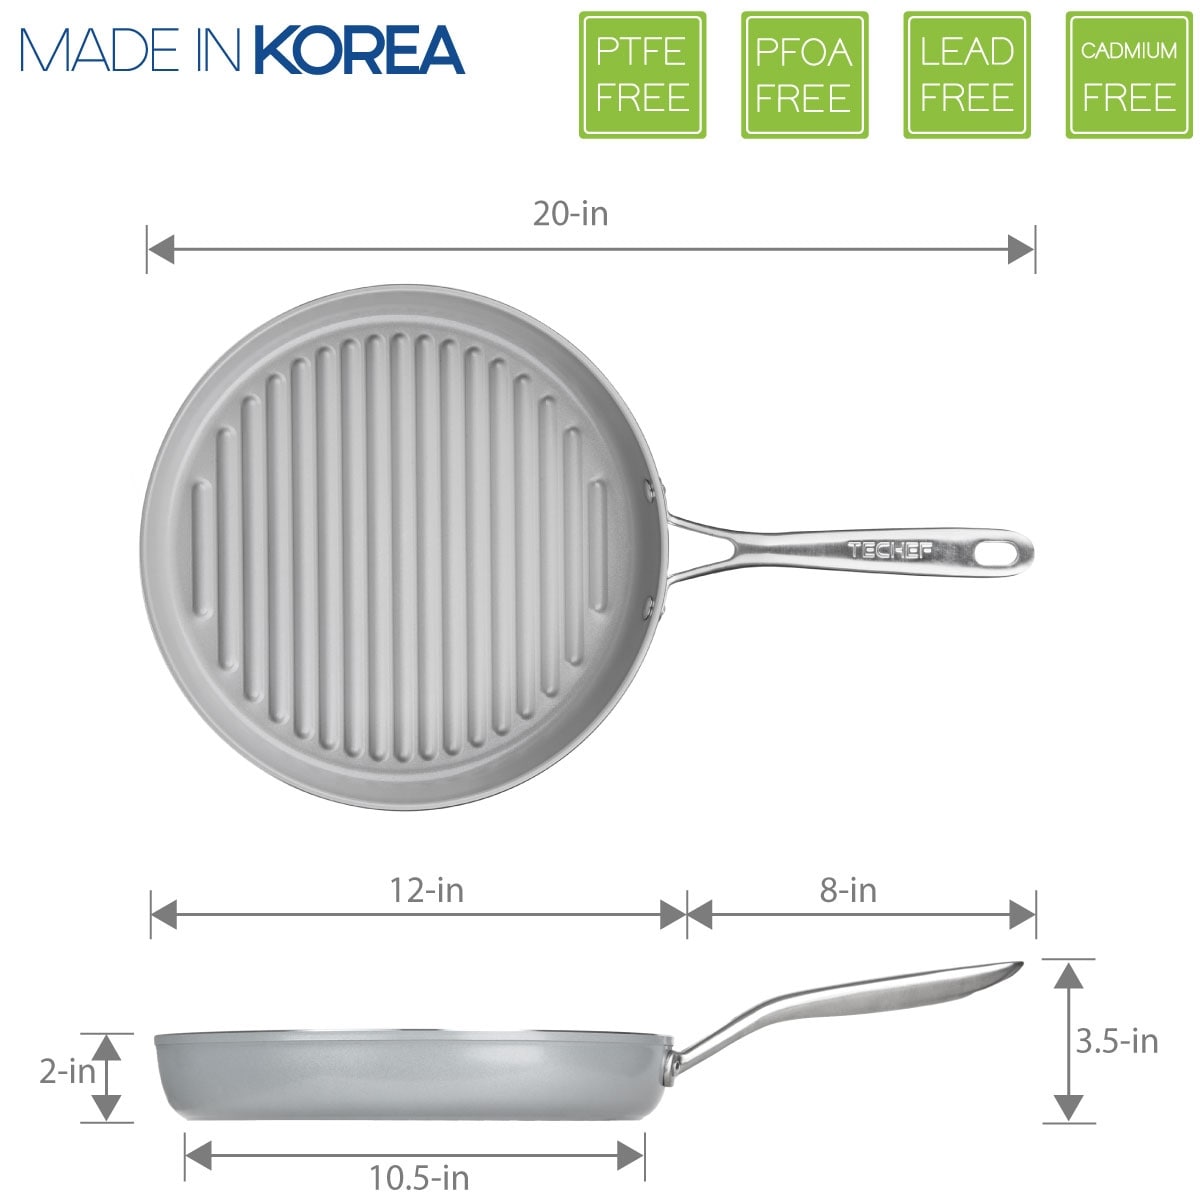 TECHEF - CeraTerra Ceramic Nonstick Square Griddle Pan (PTFE and PFOA Free  Ceramic Exterior & Interior), Oven & Dishwasher Safe, Made in Korea